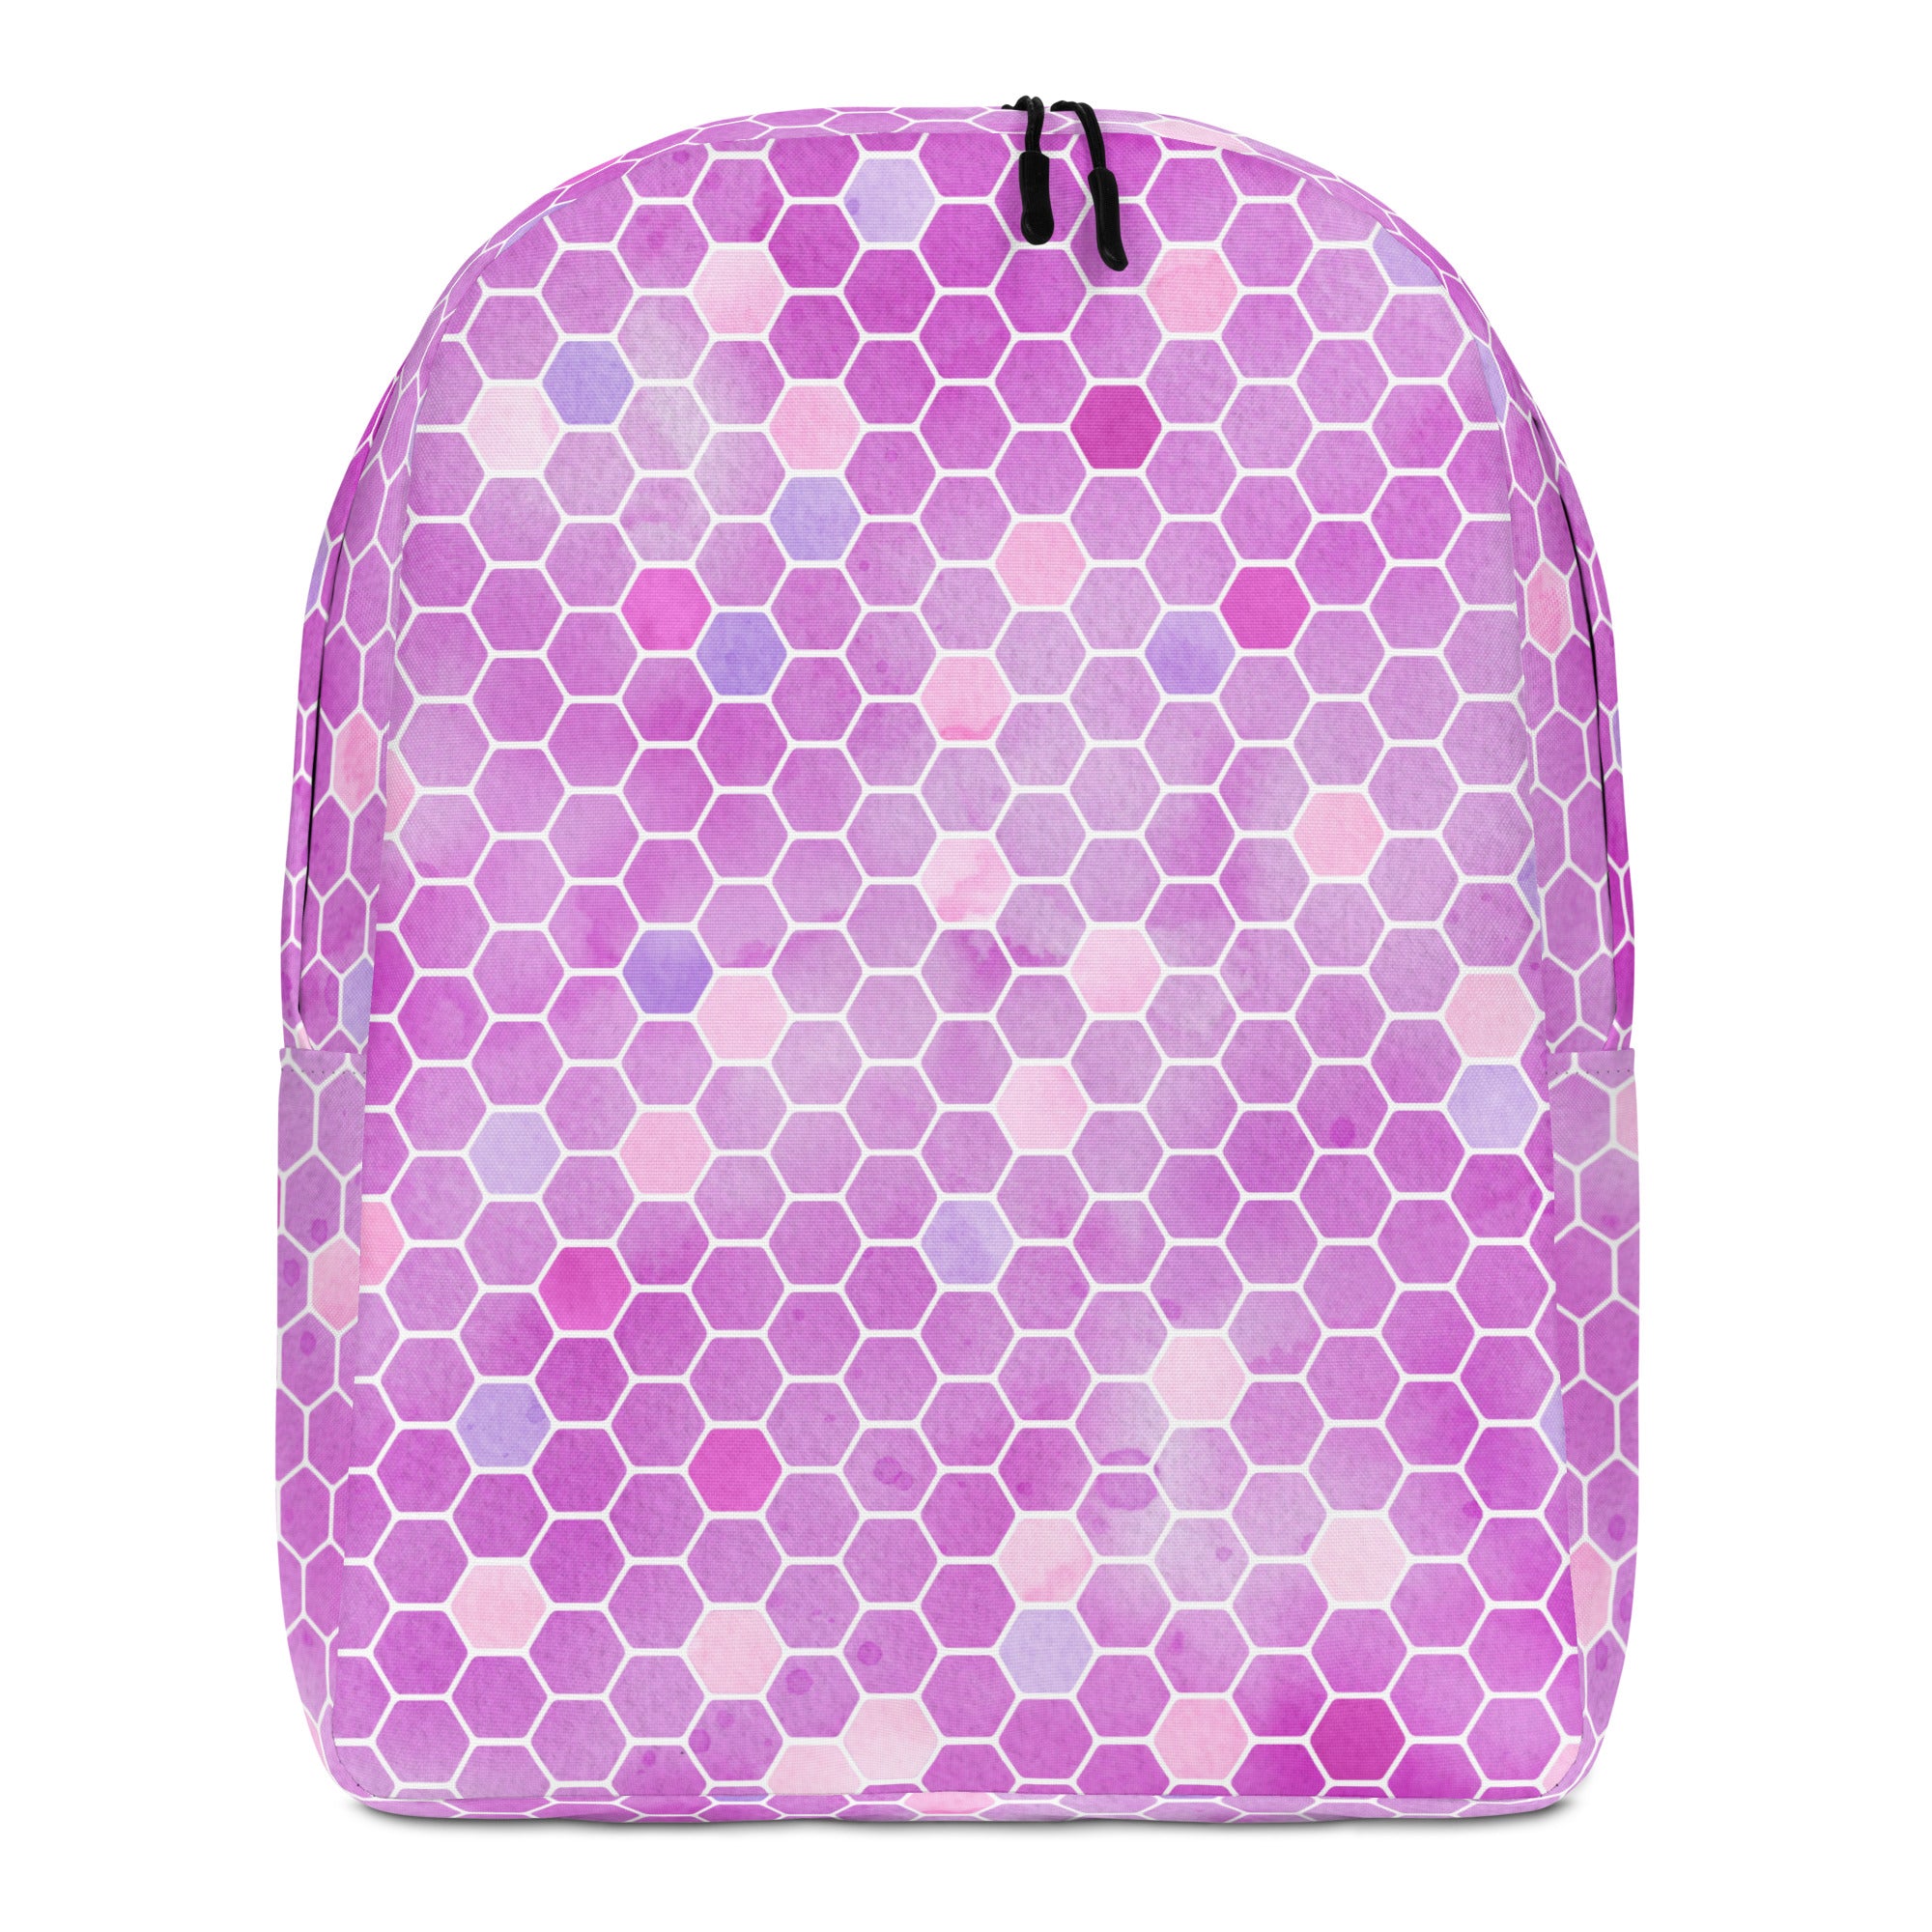 Minimalist Backpack- Honeycomb Pink